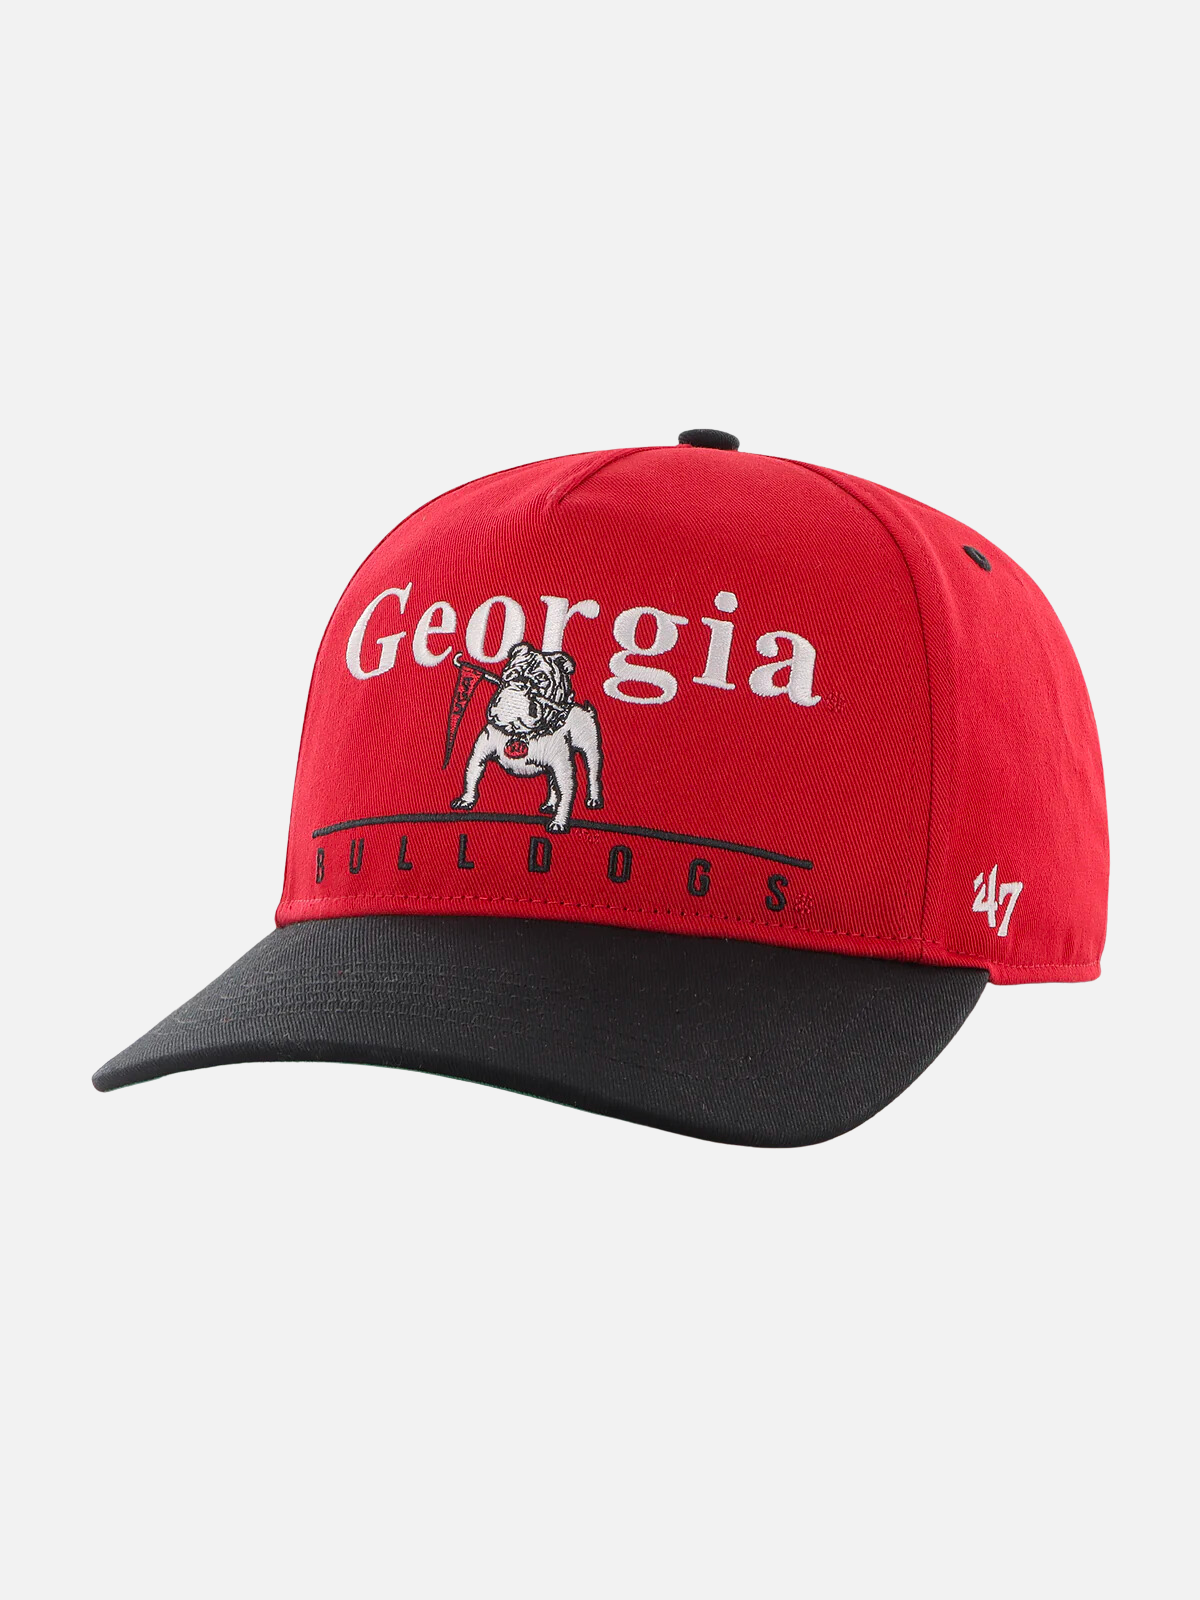 Georgia Bulldogs Vintage Logo Hat Red Black UGA Mens Gift Cap Kempt Athens Georgia 